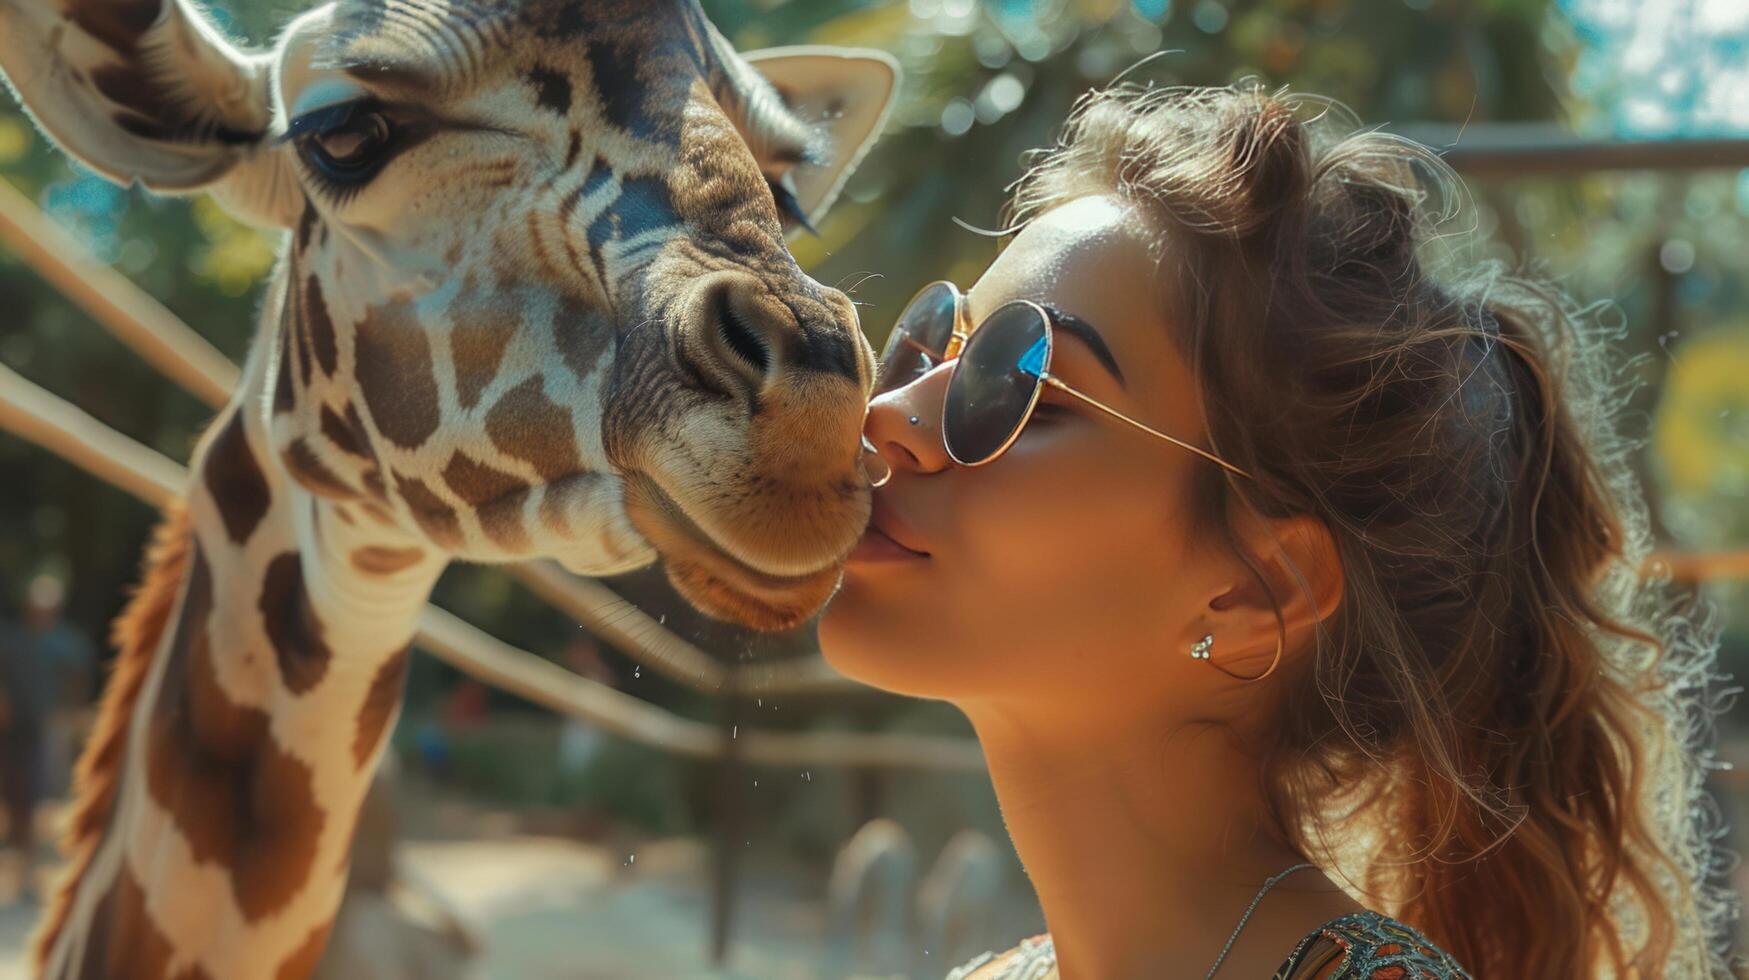 AI generated Young beautiful woman feeding a giraffe in the zoo photo